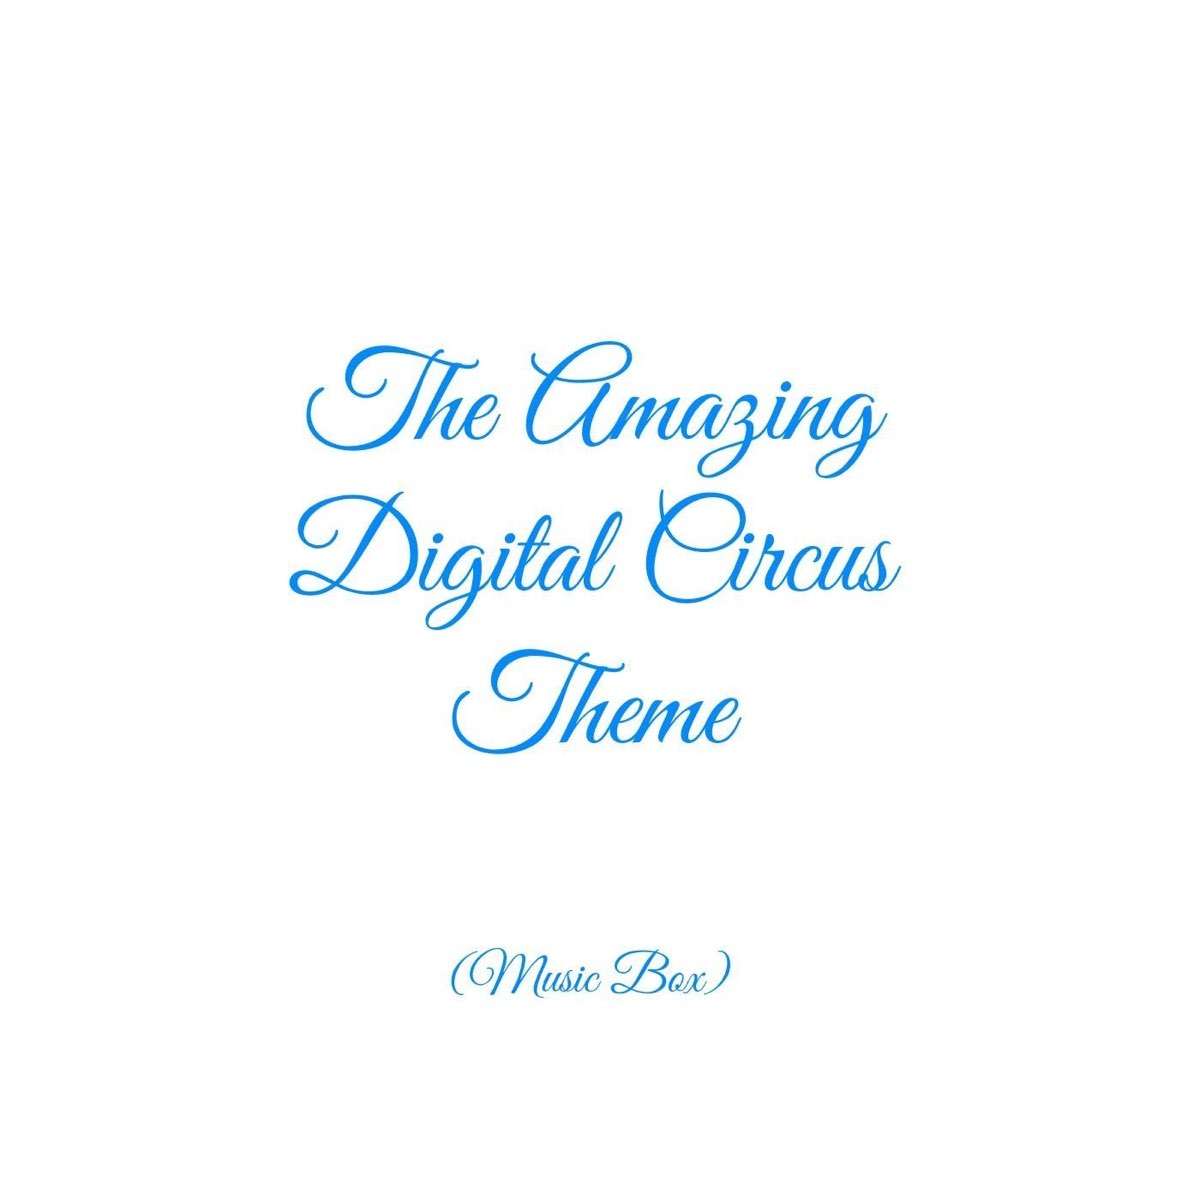 The Amazing Digital Circus Theme (Music Box) - Single - Album by Club  Unicorn - Apple Music